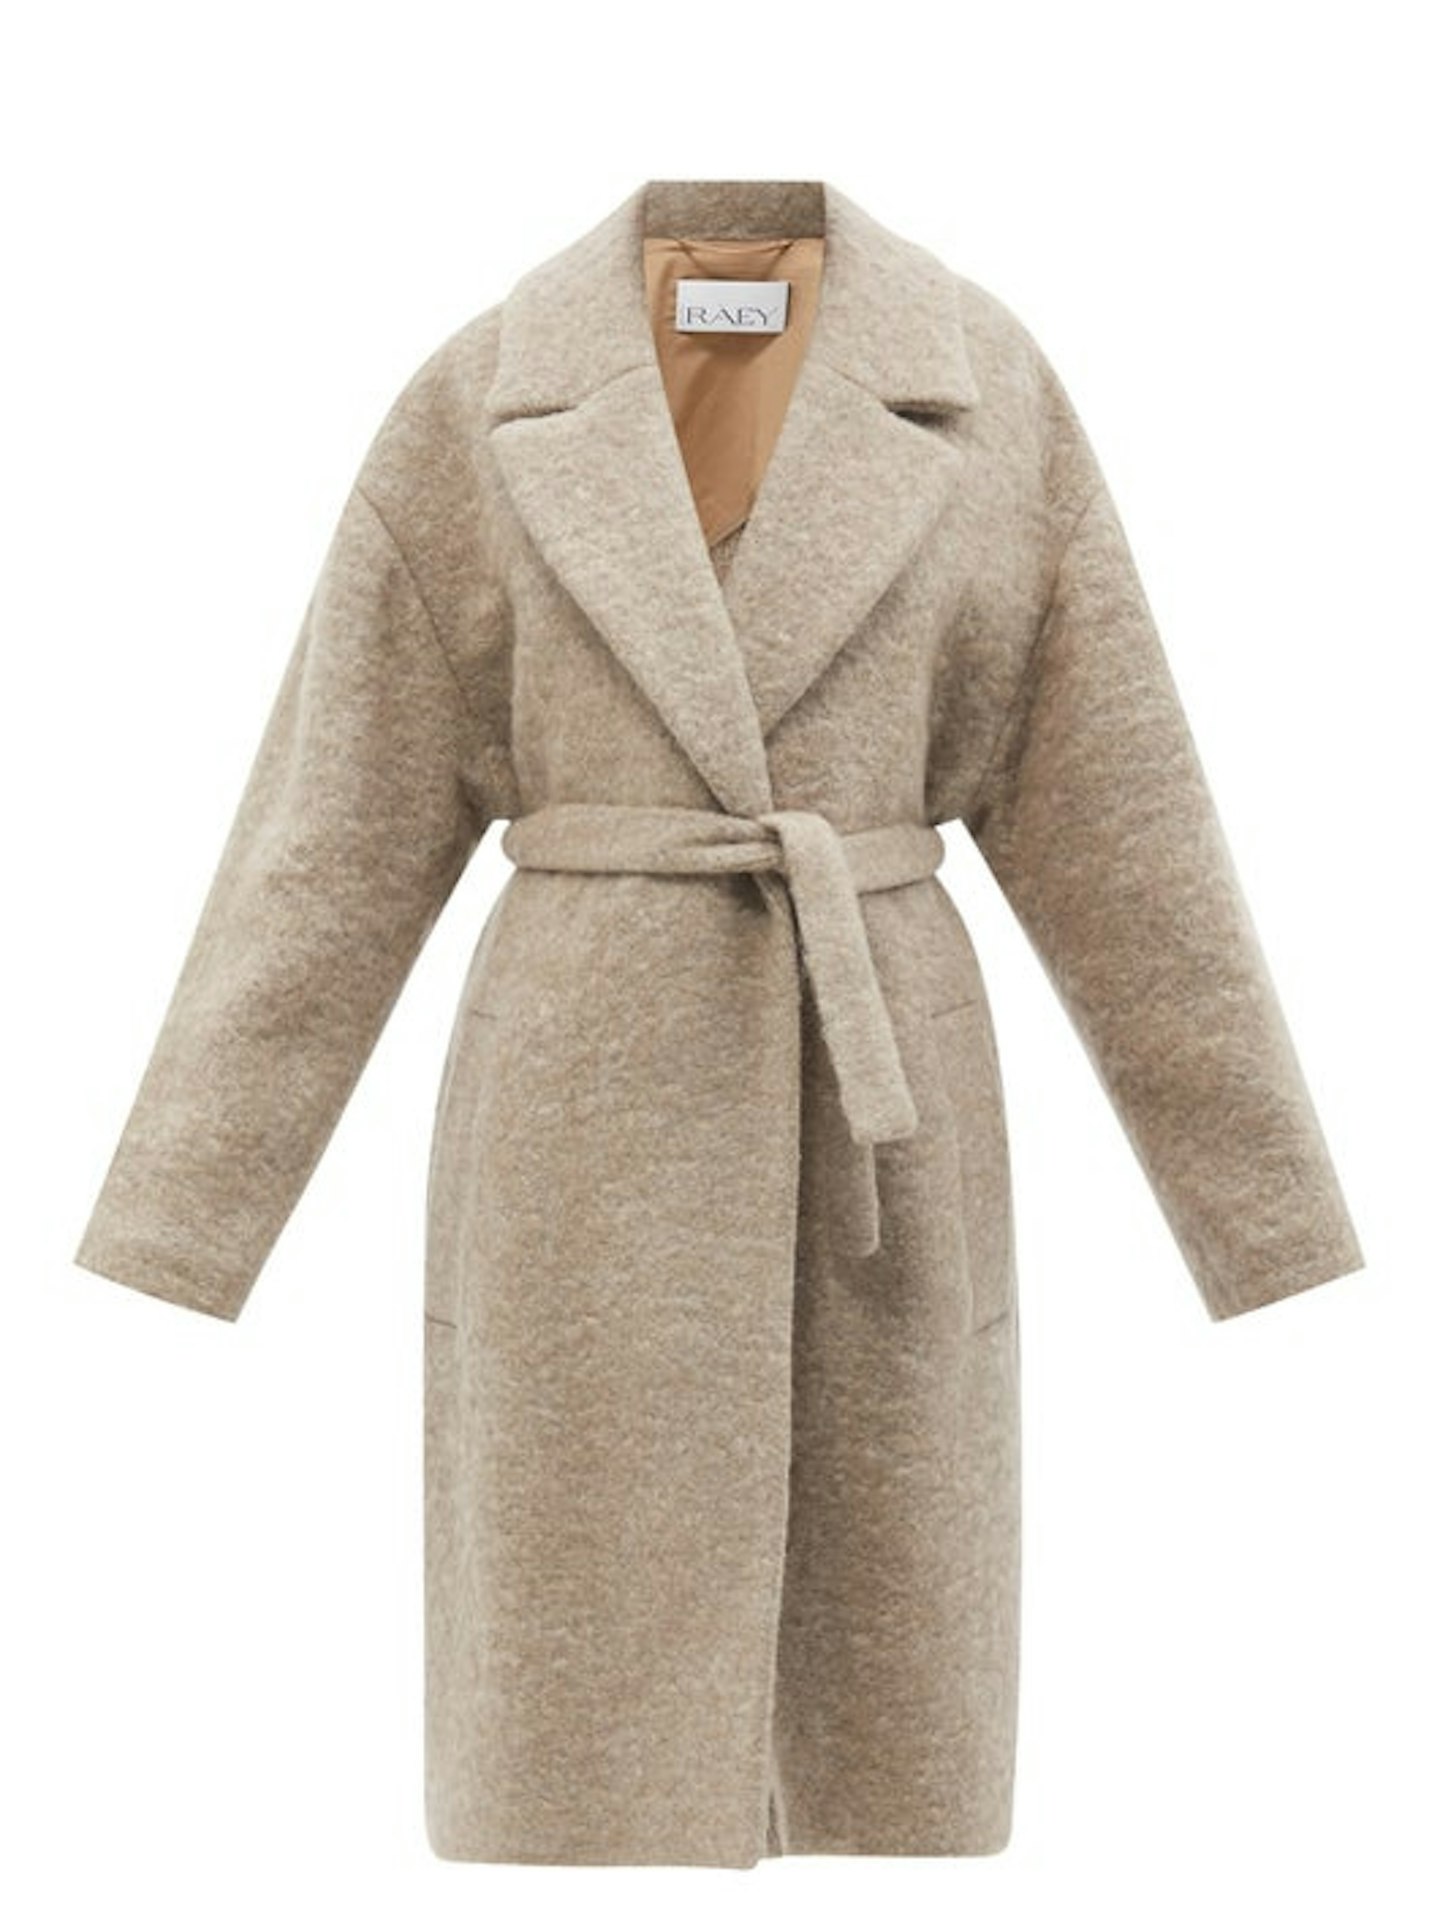 Raey, Belted Wool-Blend Coat, £595